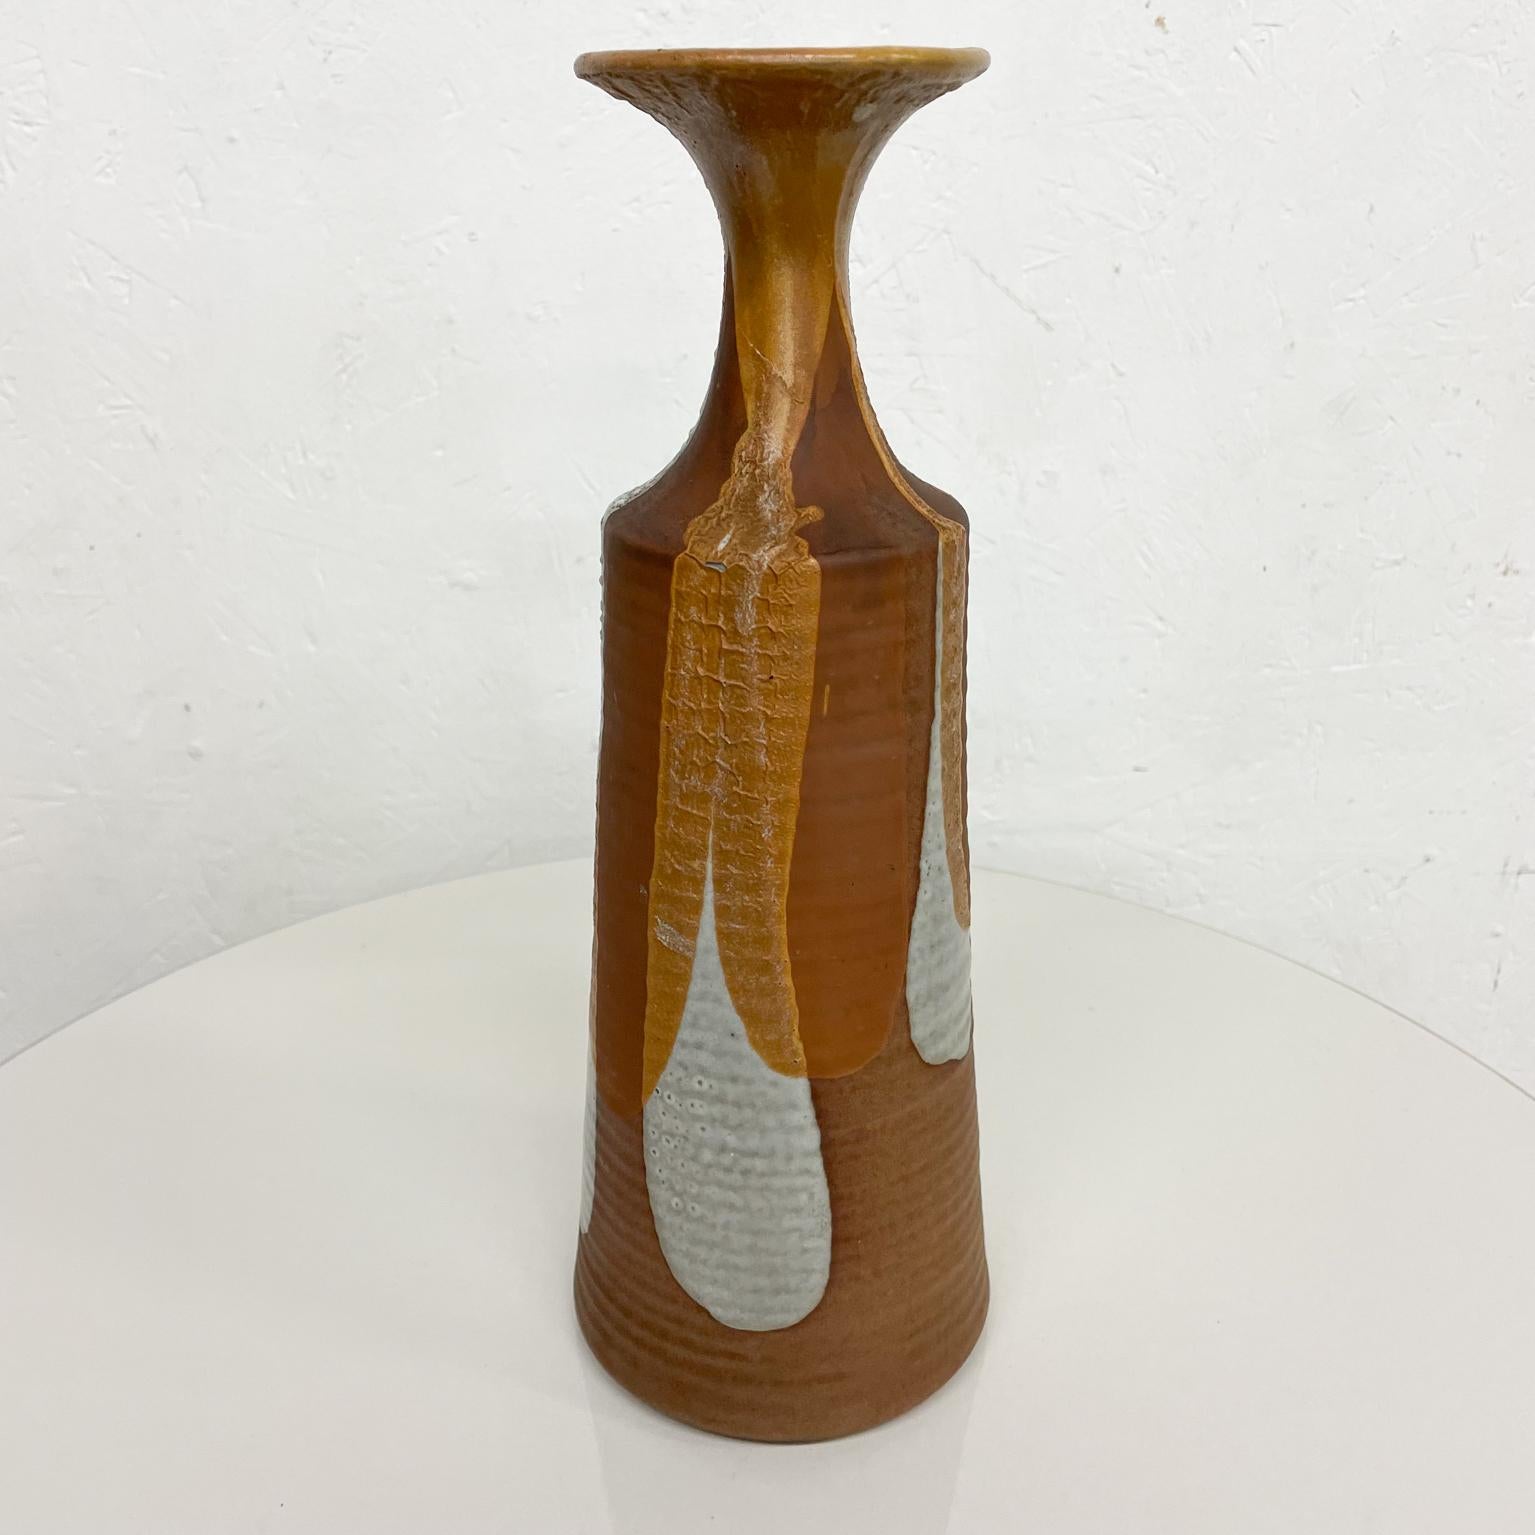 Modern Art Sculptural Studio Pottery Vase Warm Colors David Cressey Style 1970s For Sale 1